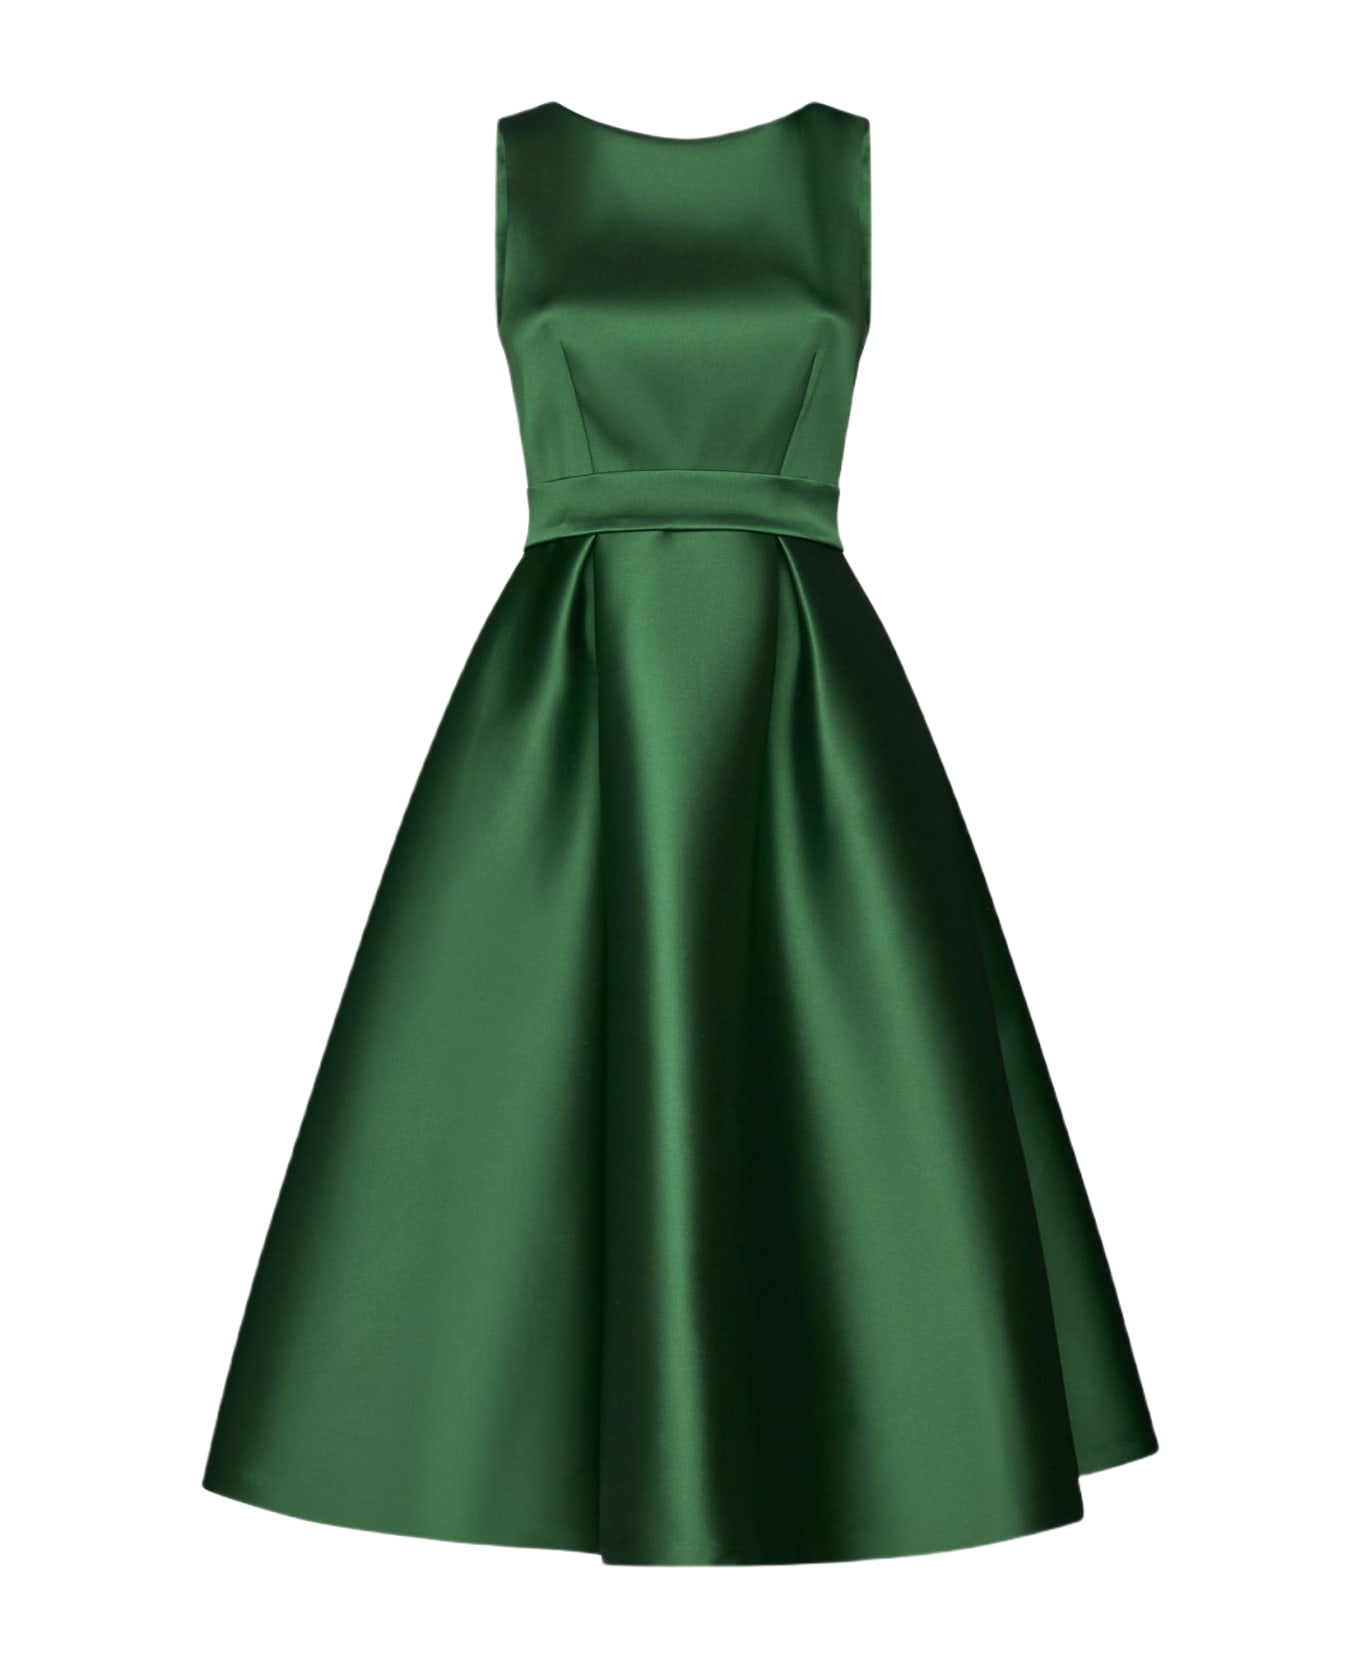 Parosh Papavero Duchesse Dress - Verde